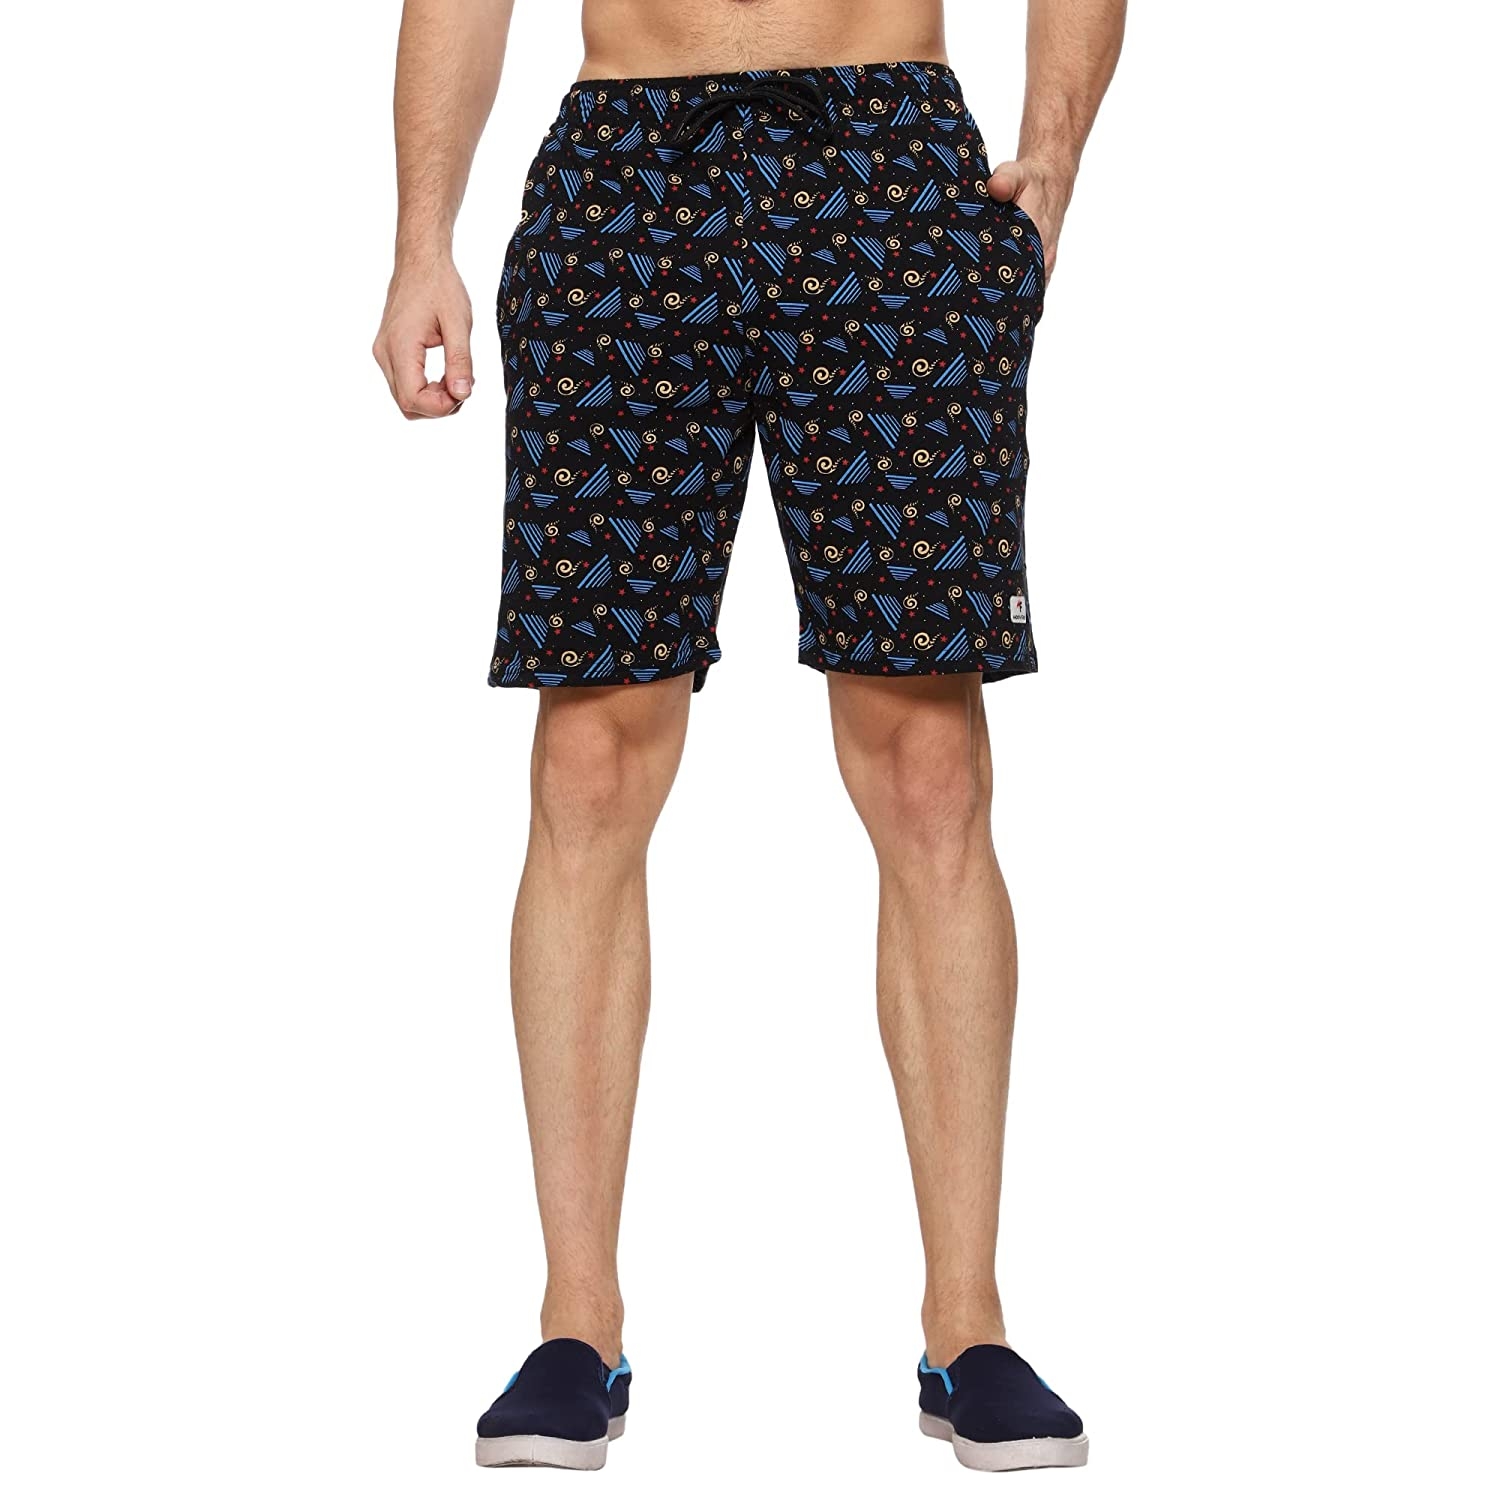 Moovfree Mens Cotton Bermuda Printed Casual Shorts Regular Fit Lounge Shorts with Zip Pockets, Shady Blue